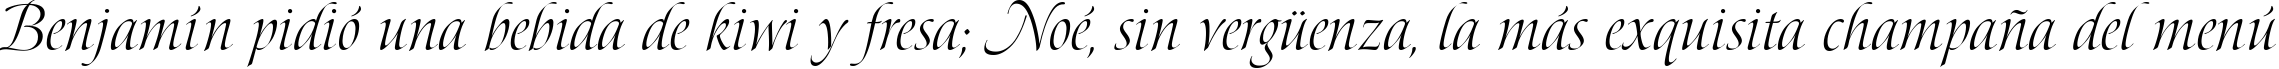 Пример написания шрифтом Bolero script текста на испанском